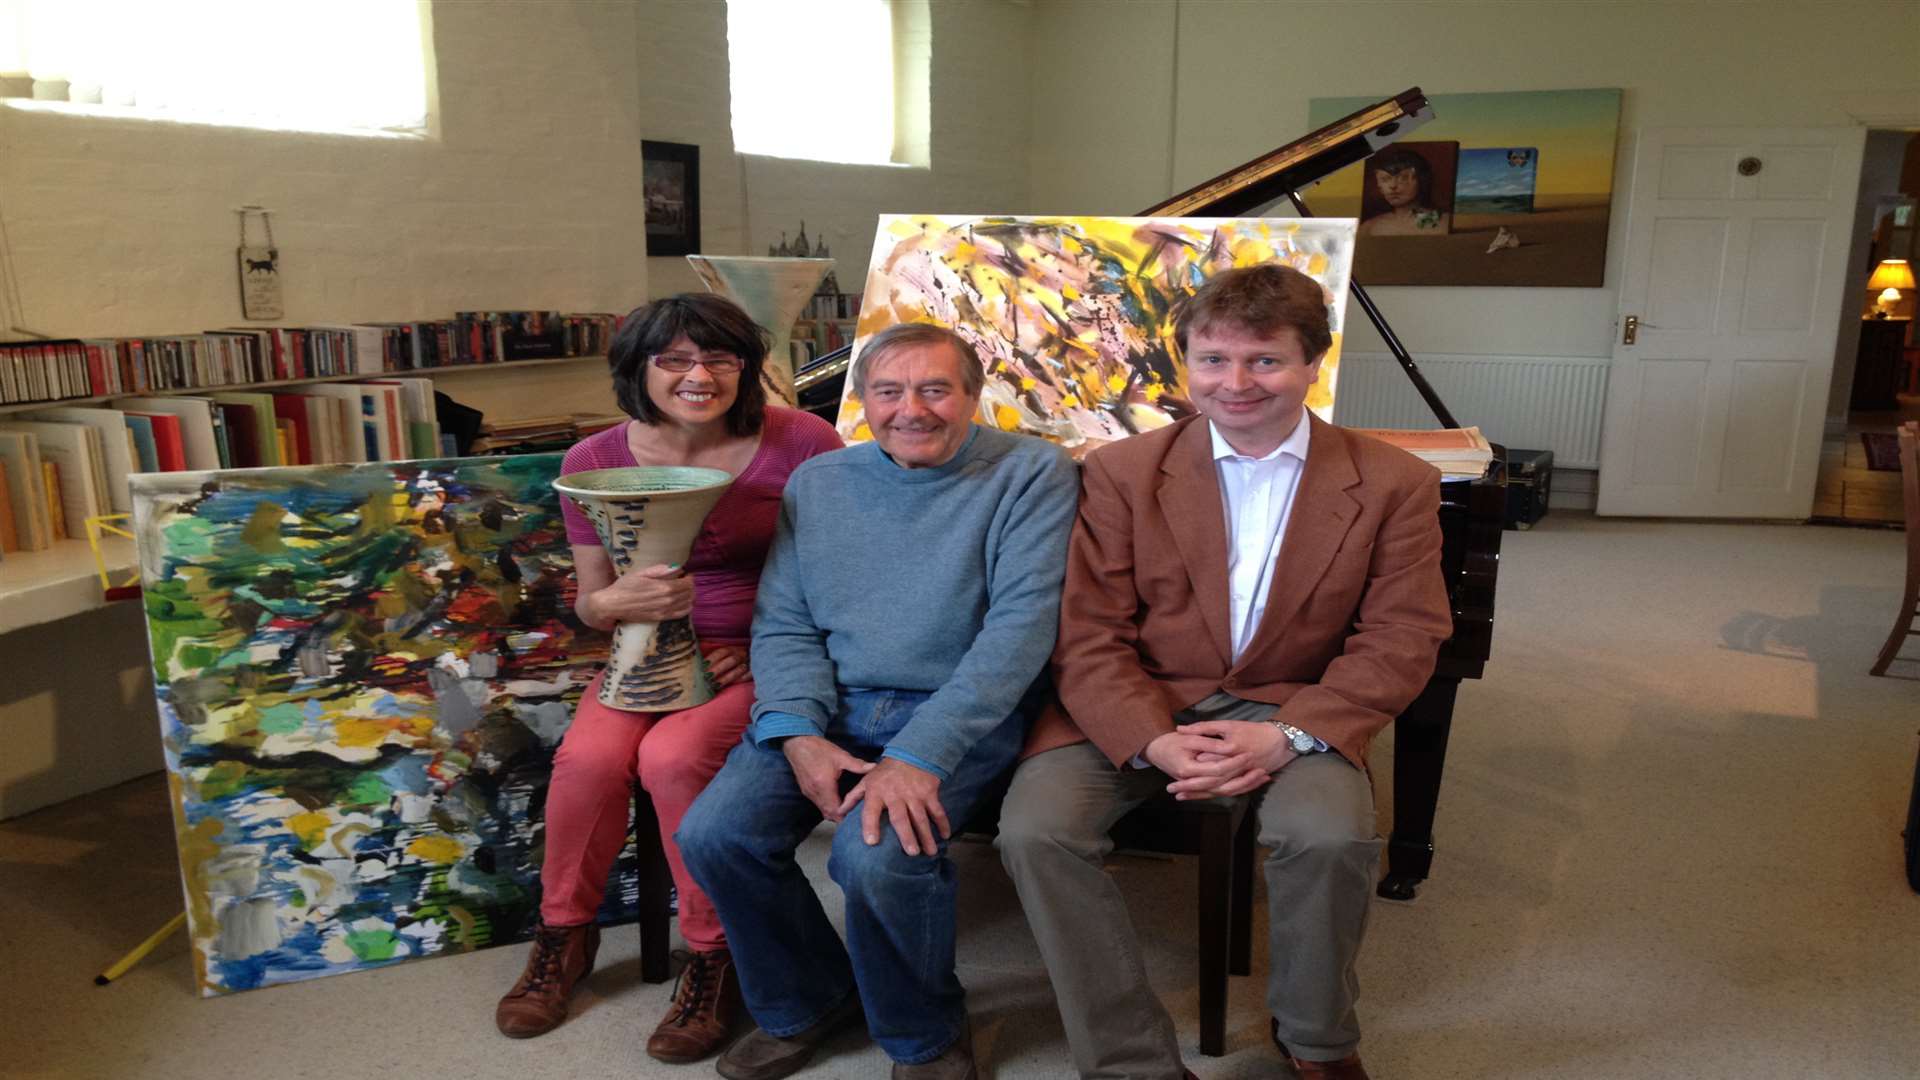 Artists Penny Bearman and David White with artist director Paul Edlin